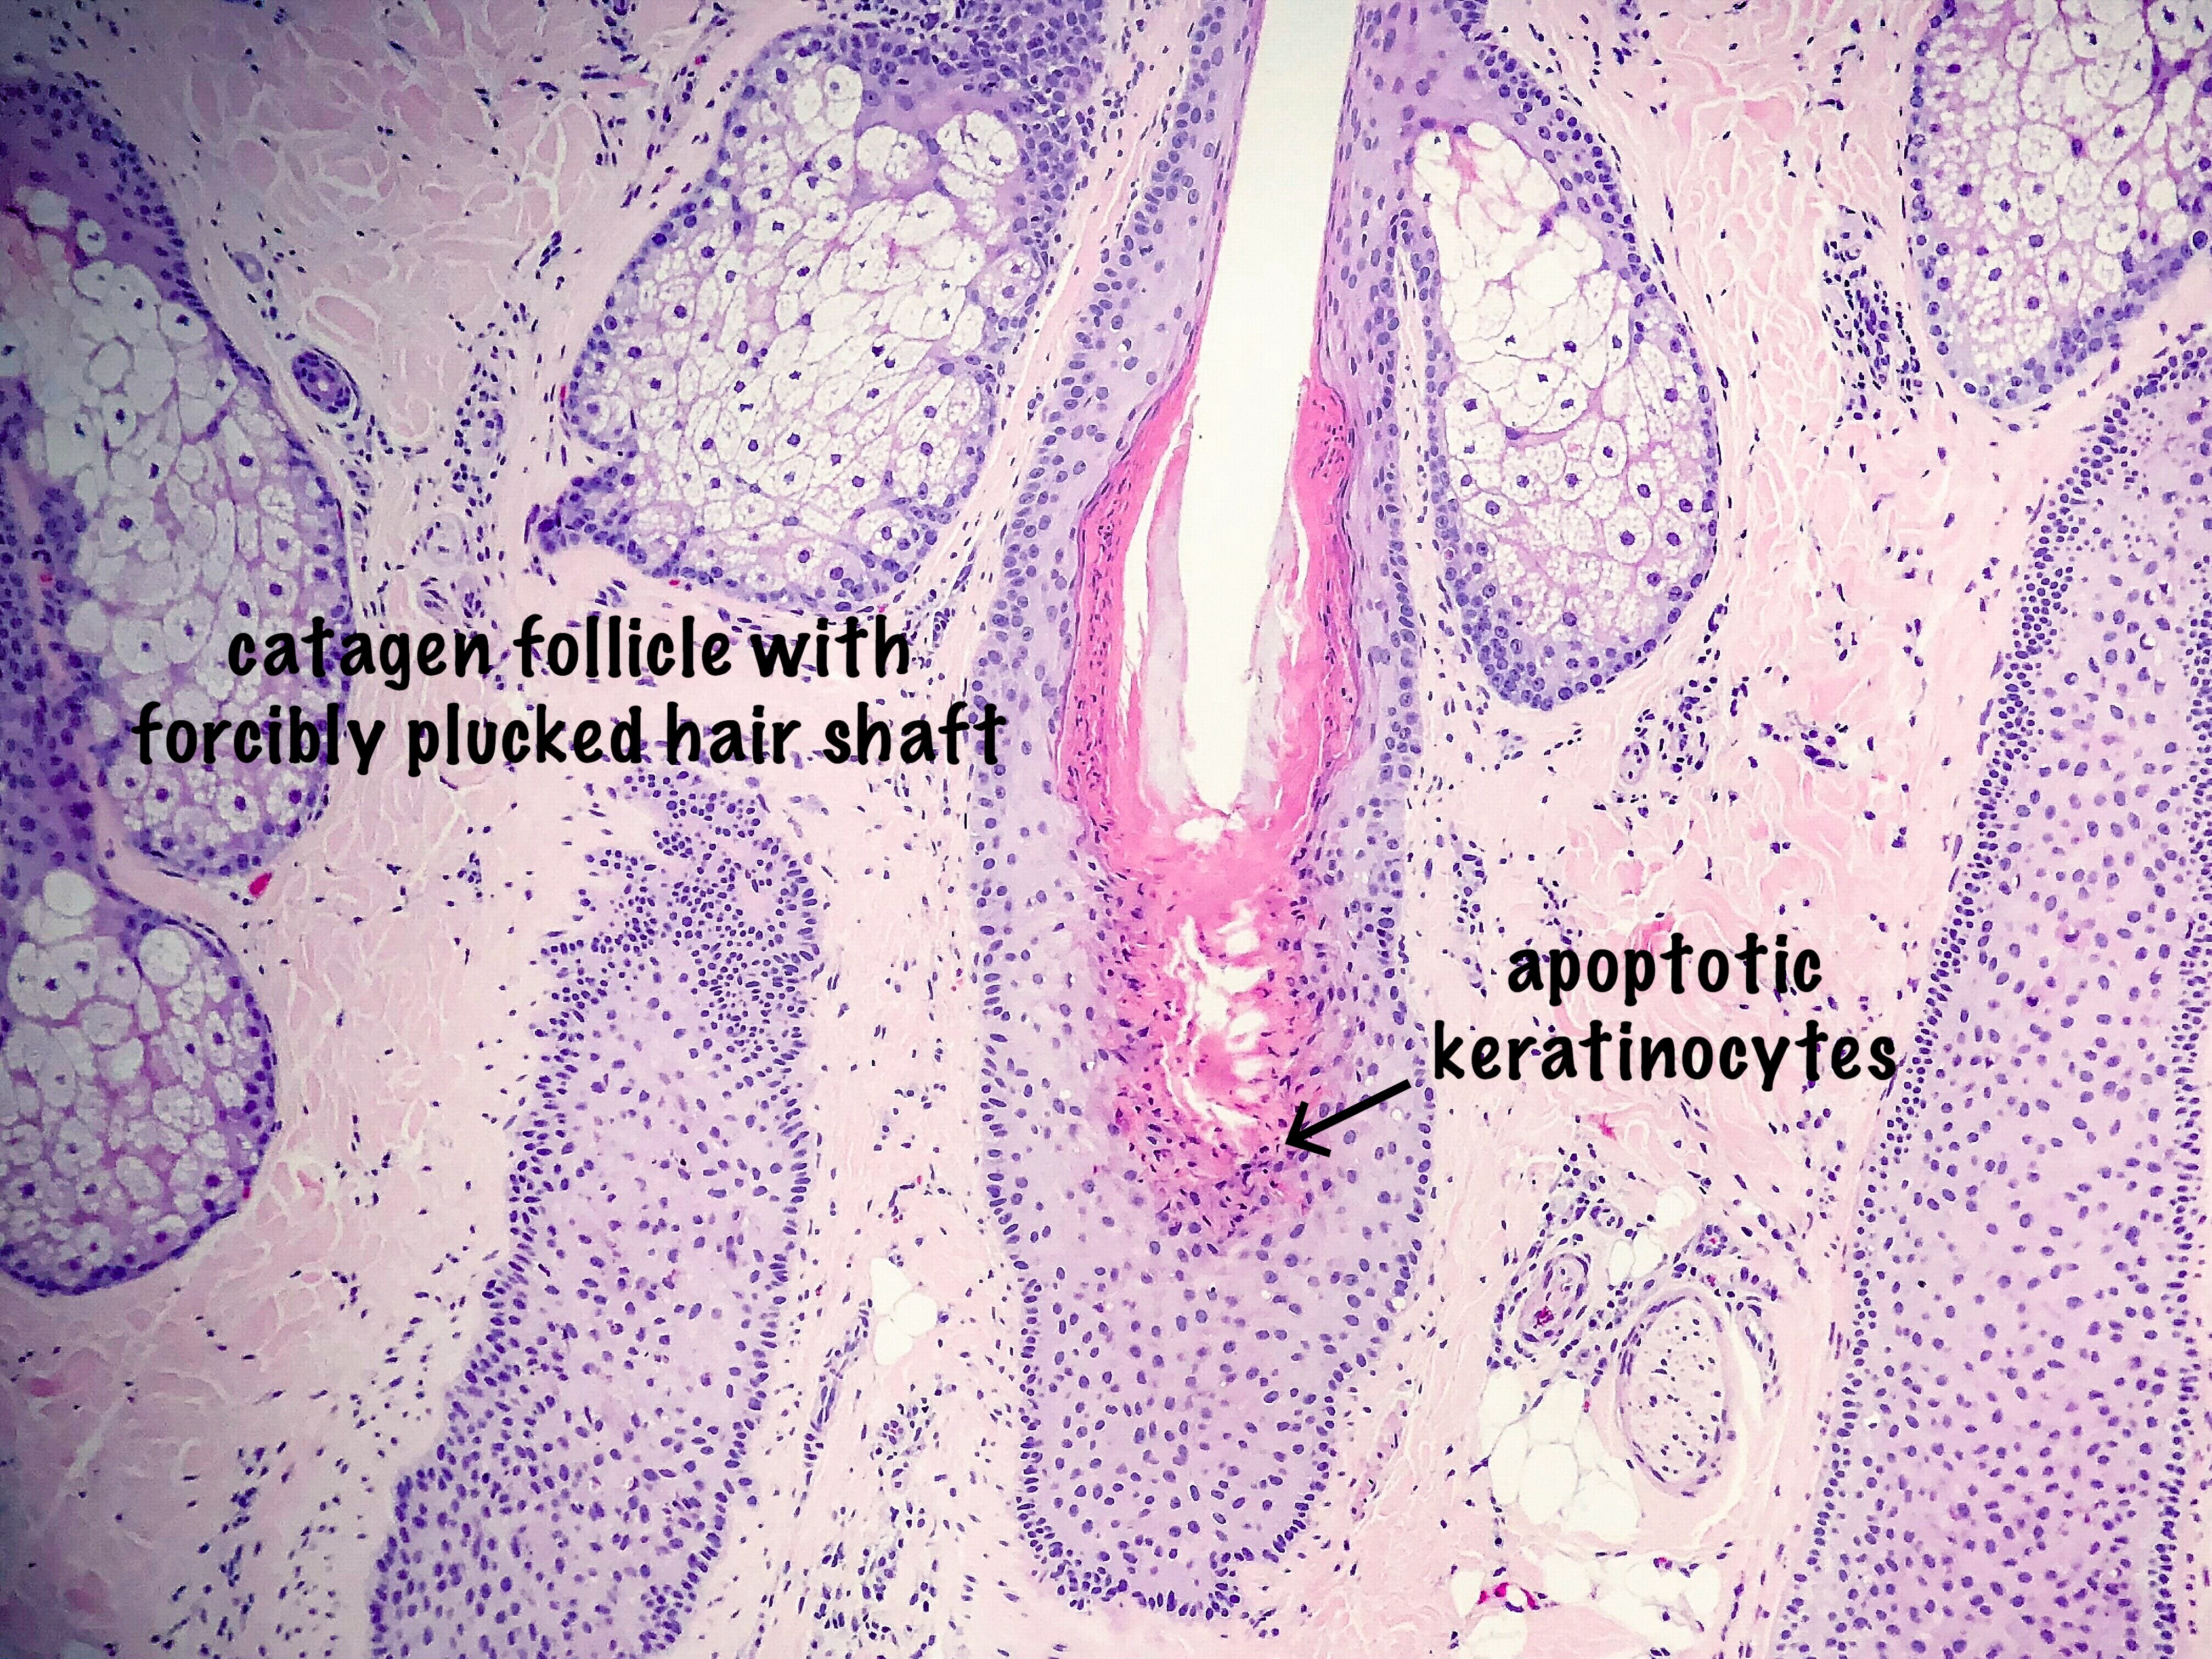 hair follicle histology